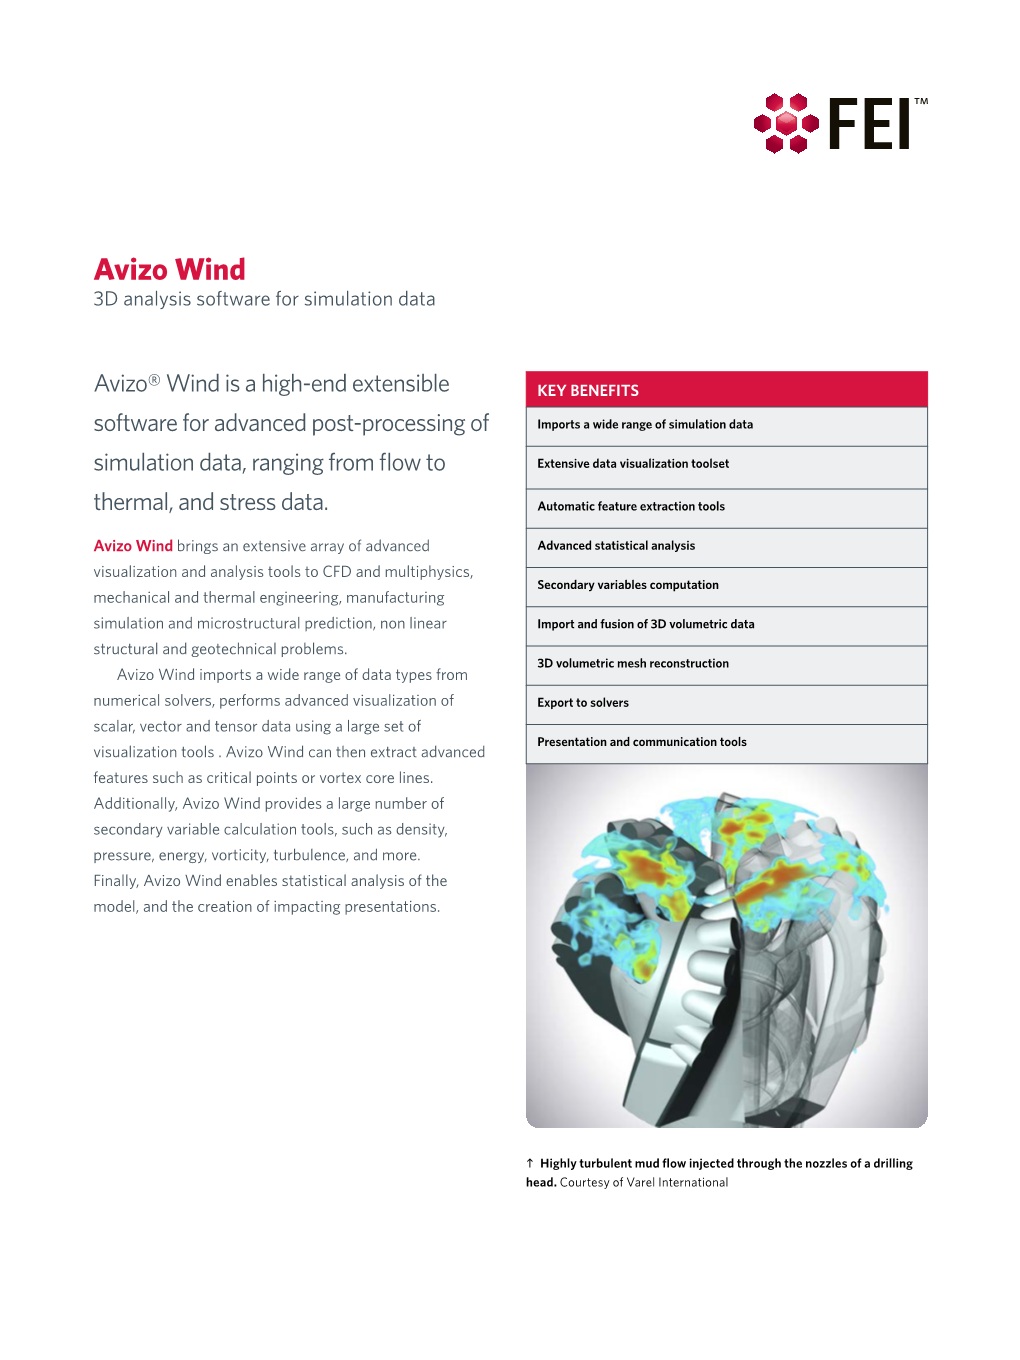 Avizo Wind 3D Analysis Software for Simulation Data